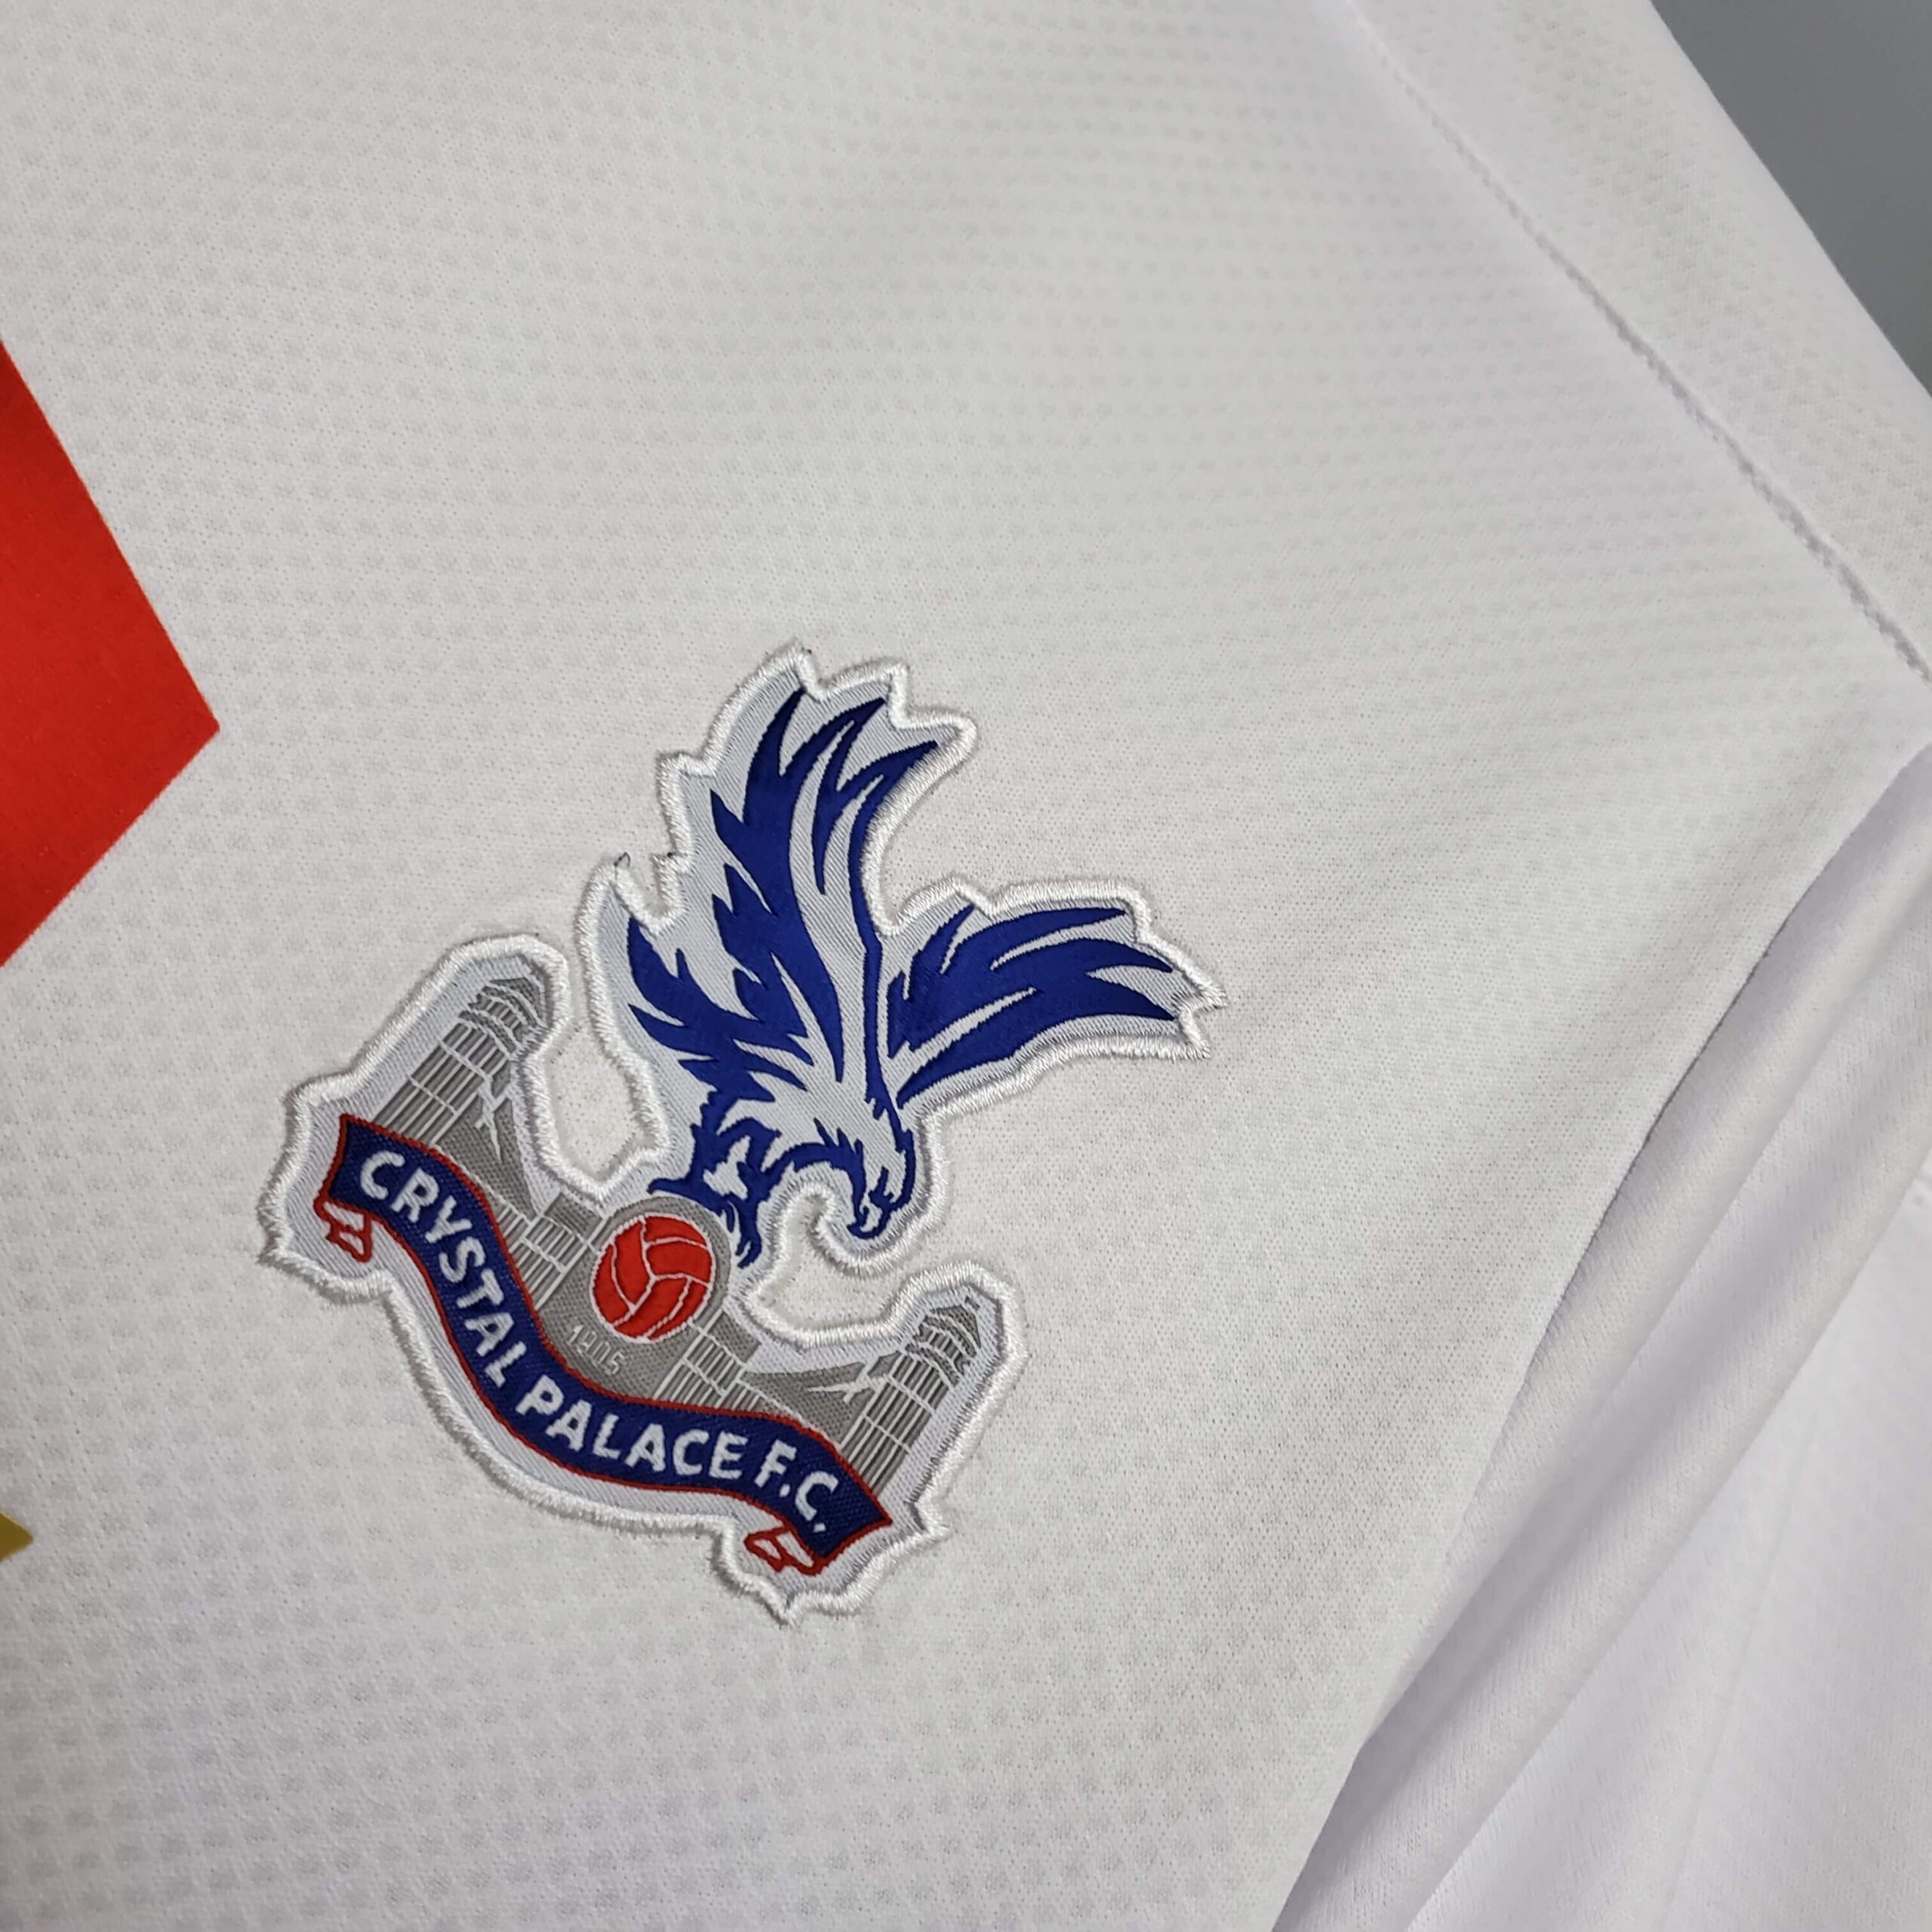 The Newkits | Buy Crystal Palace 20/21 Away Kit | Football ...